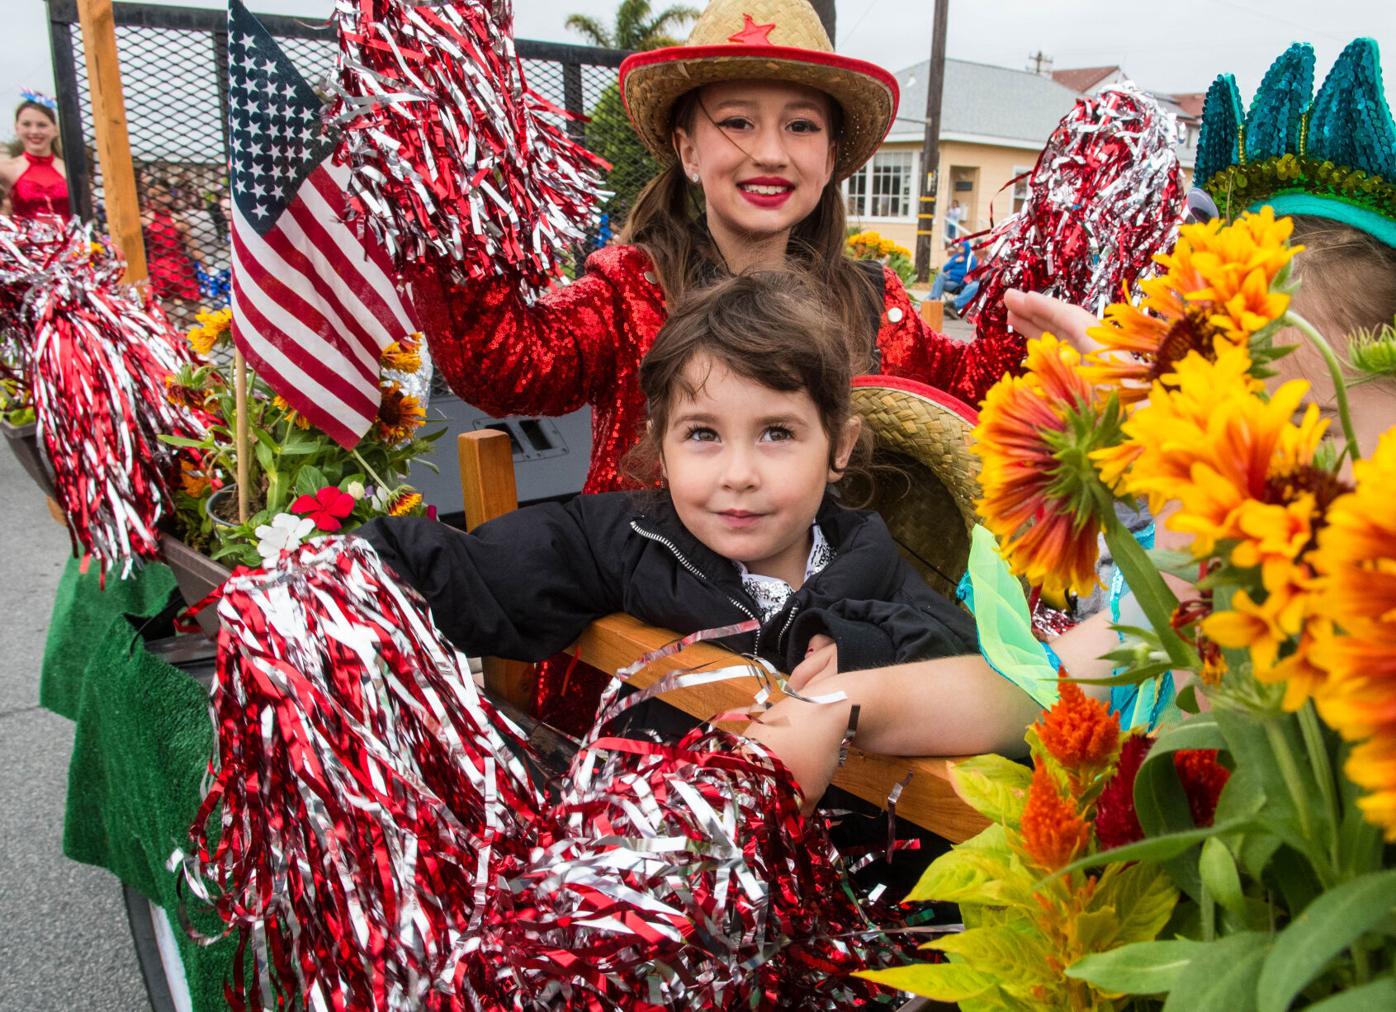 Lompoc Flower Festival and Parade - Lompoc California